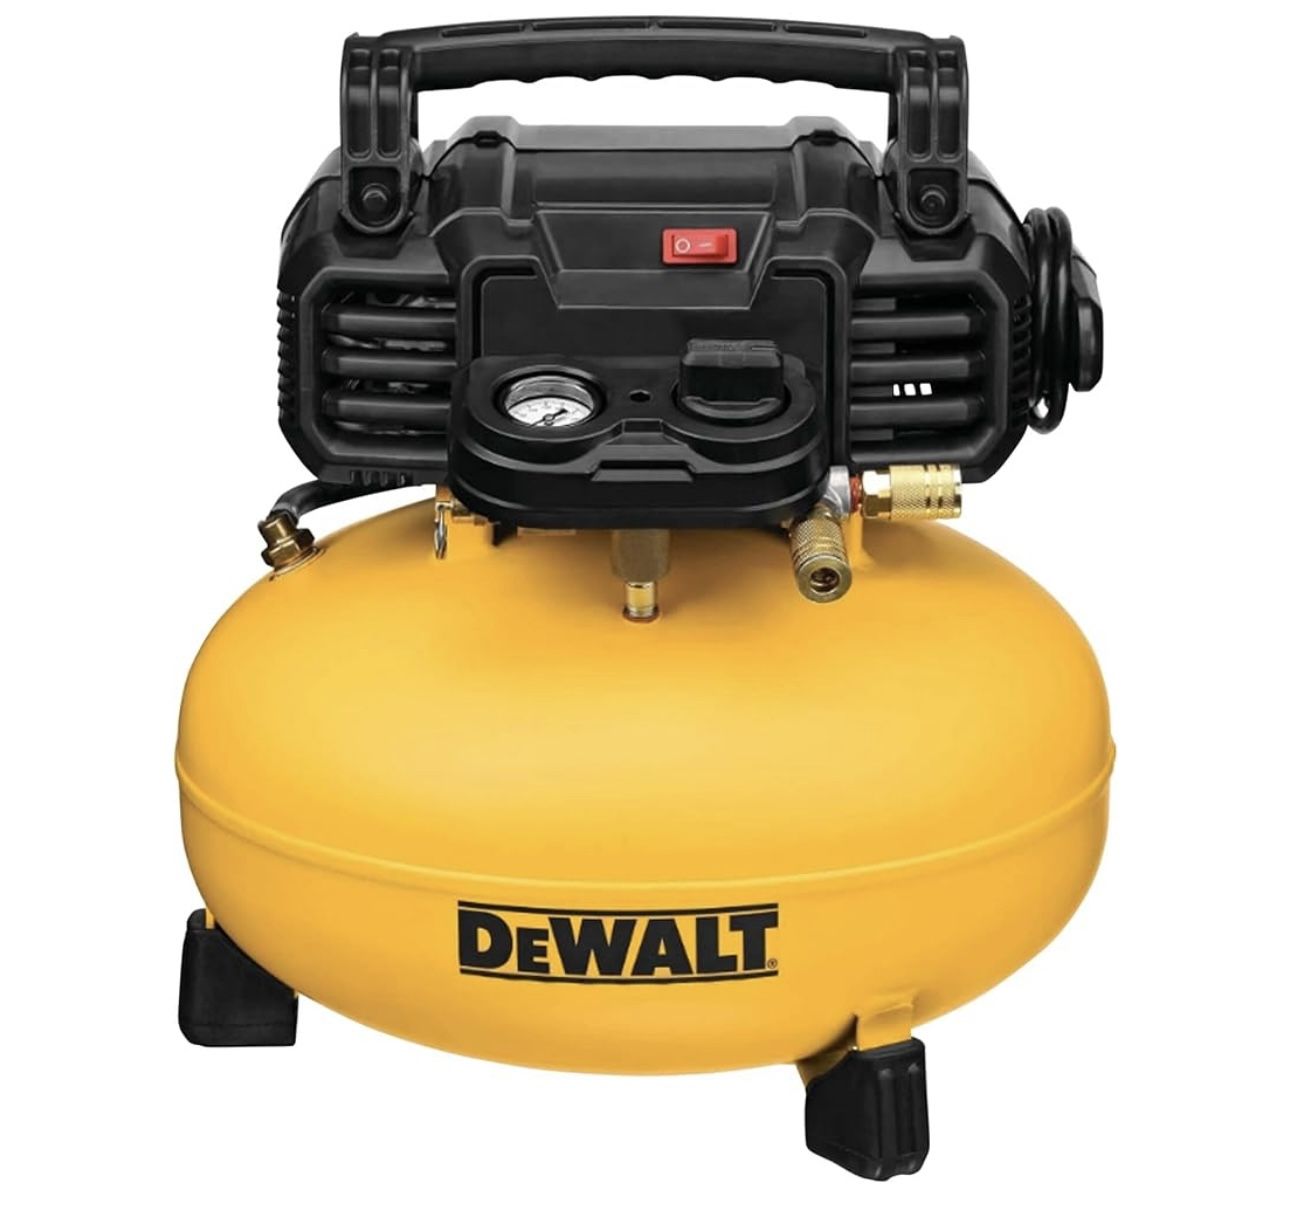 DEWALT Pancake Air Compressor, 6 Gallon, 165 PSI (DWFP55126)